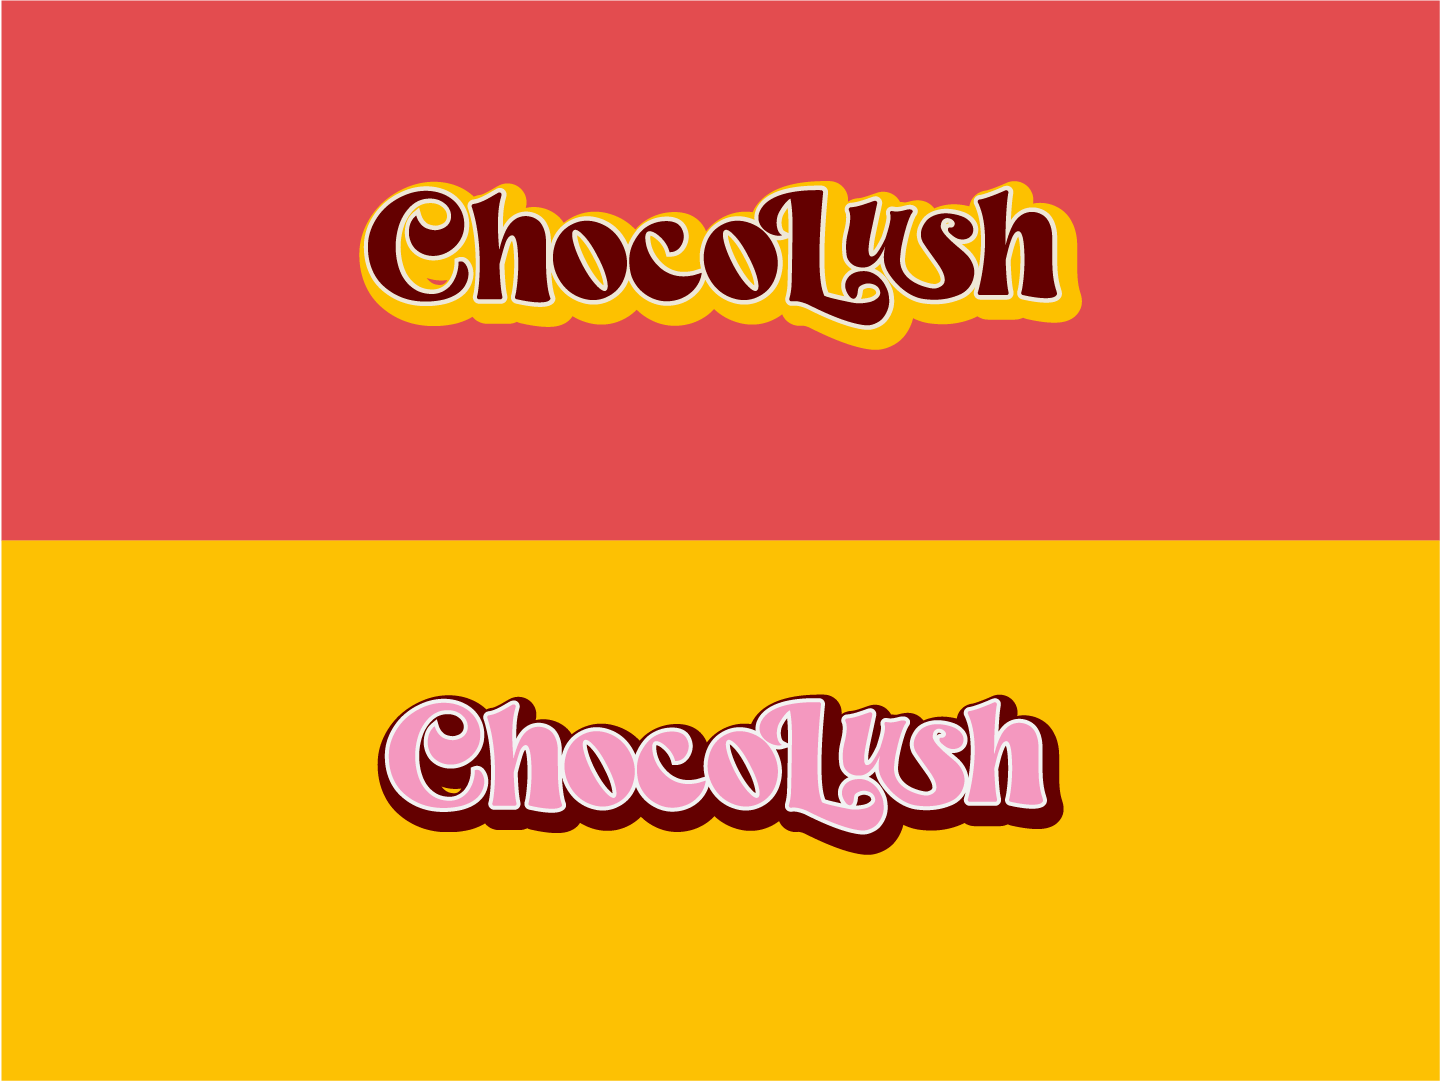 Chocolush - Chocolate Branding & Logo Design Services in Los Angeles